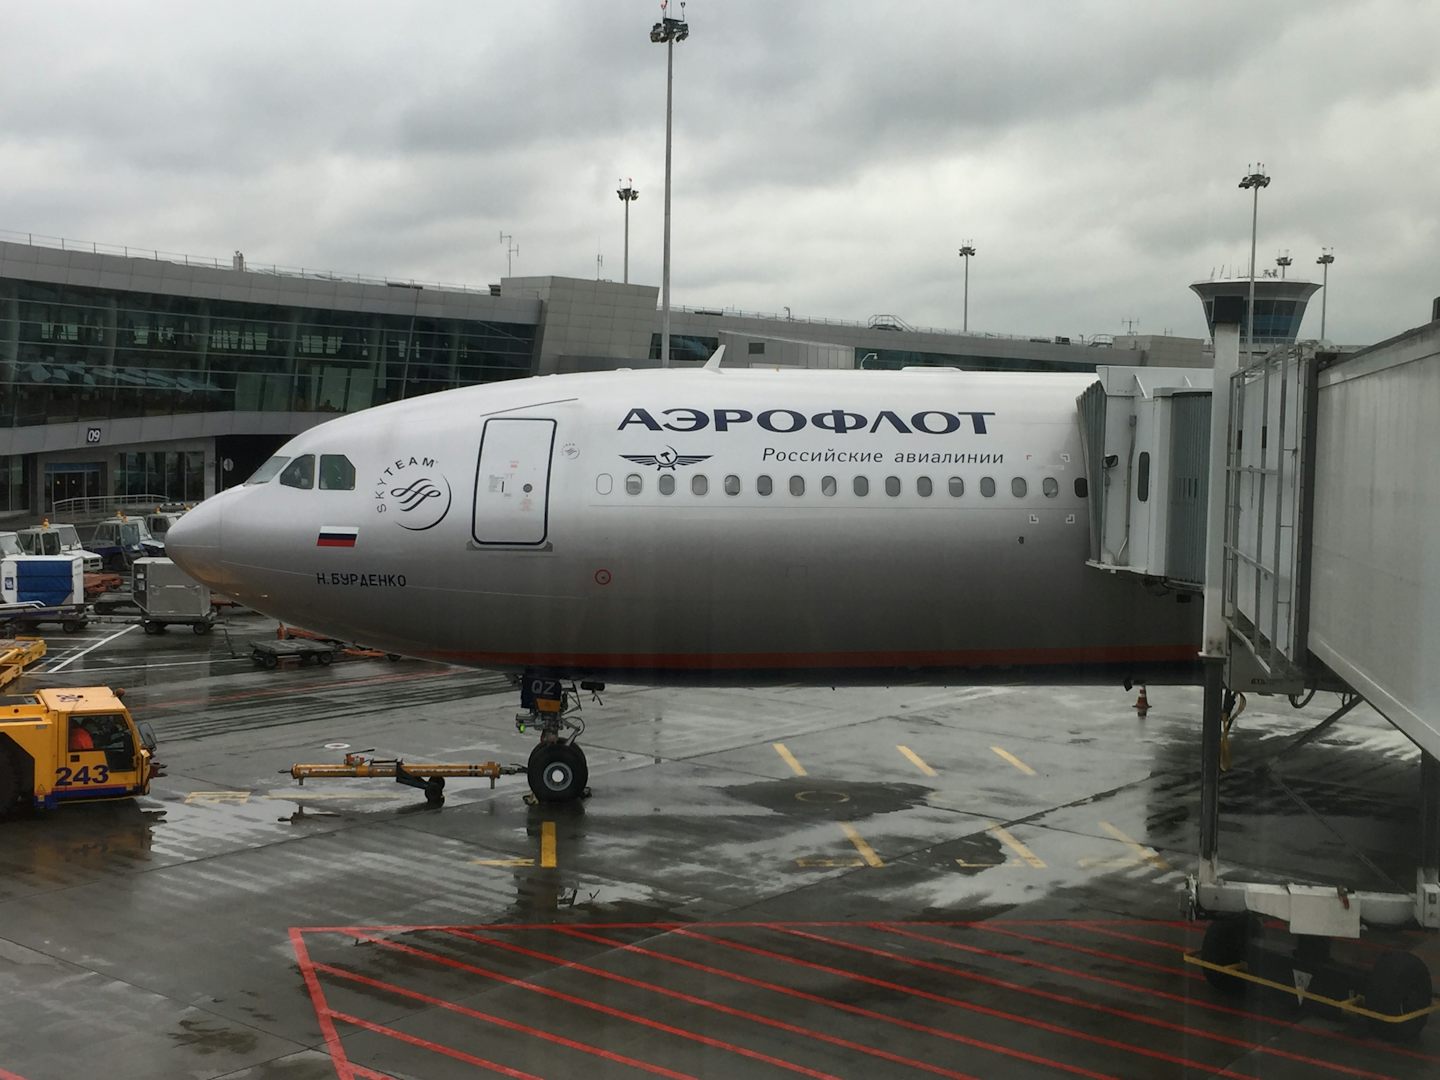 Aeroflot plane ready for departure